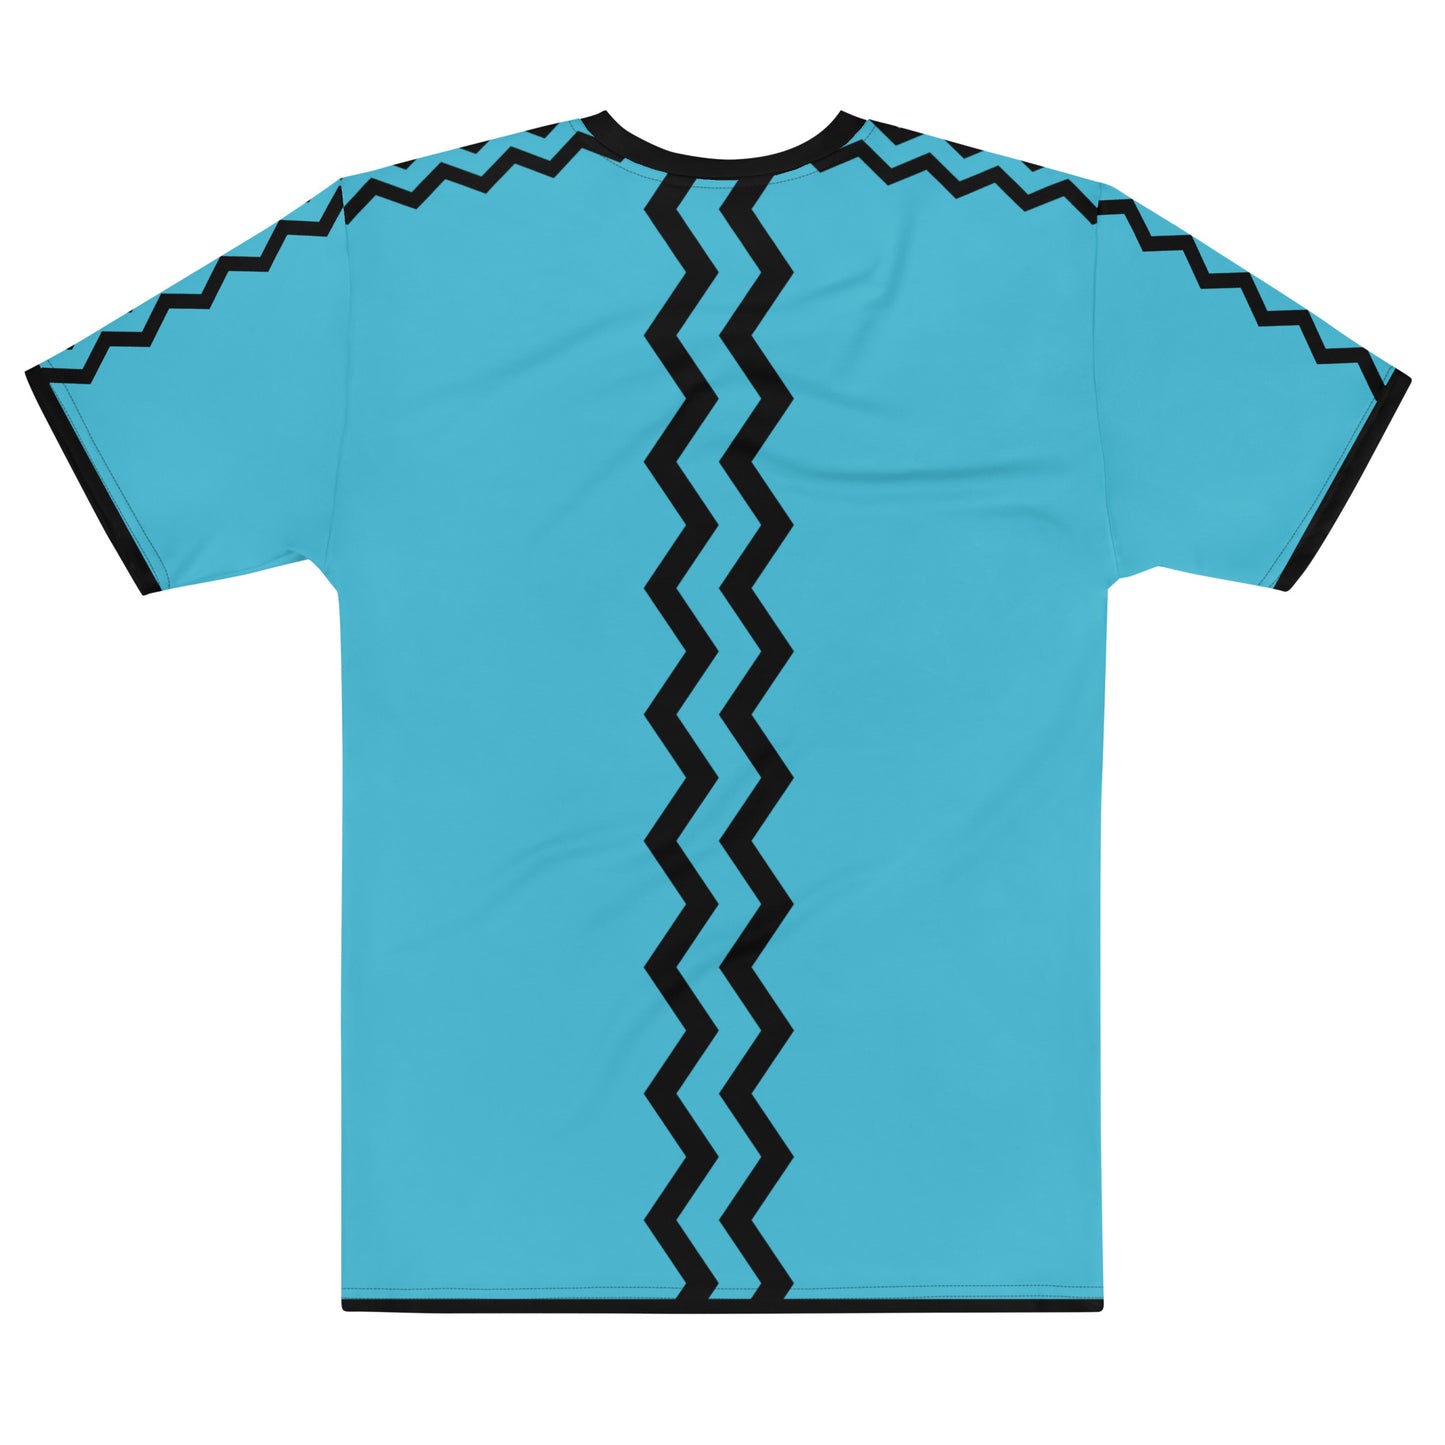 ANOYNTD [ZIGZAG] Series Men's t-shirt